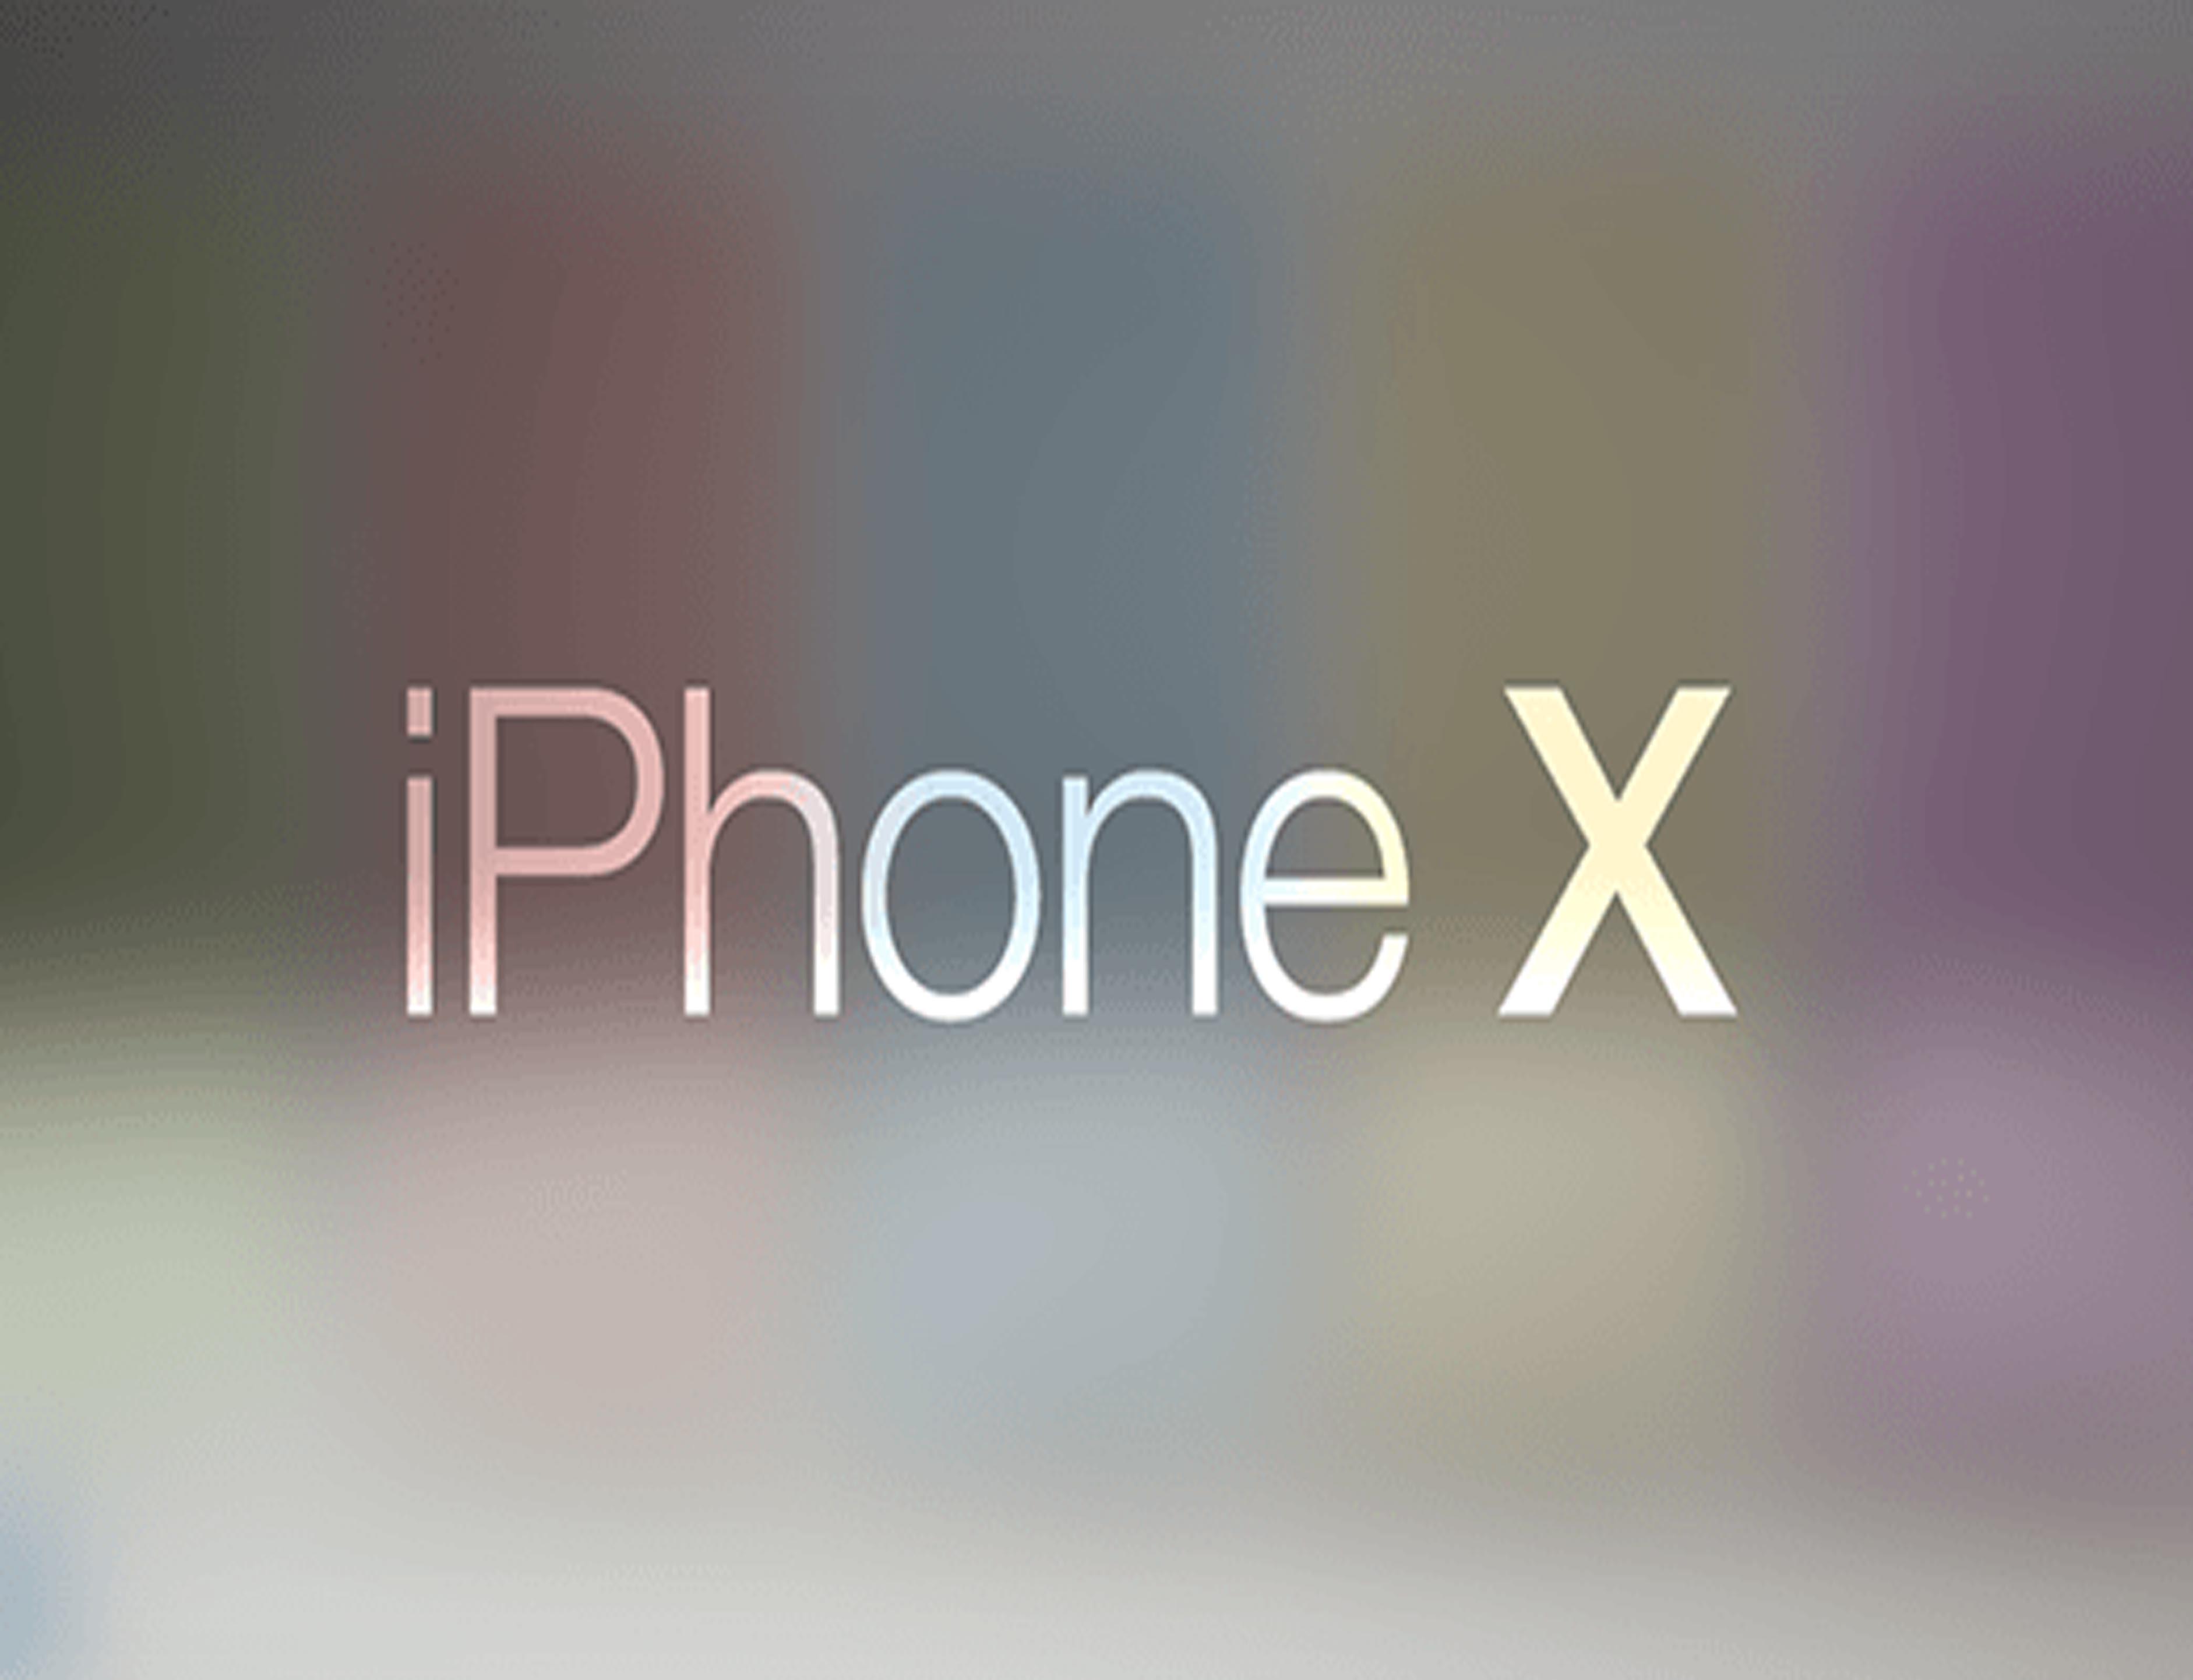 iphone X caracteristicas